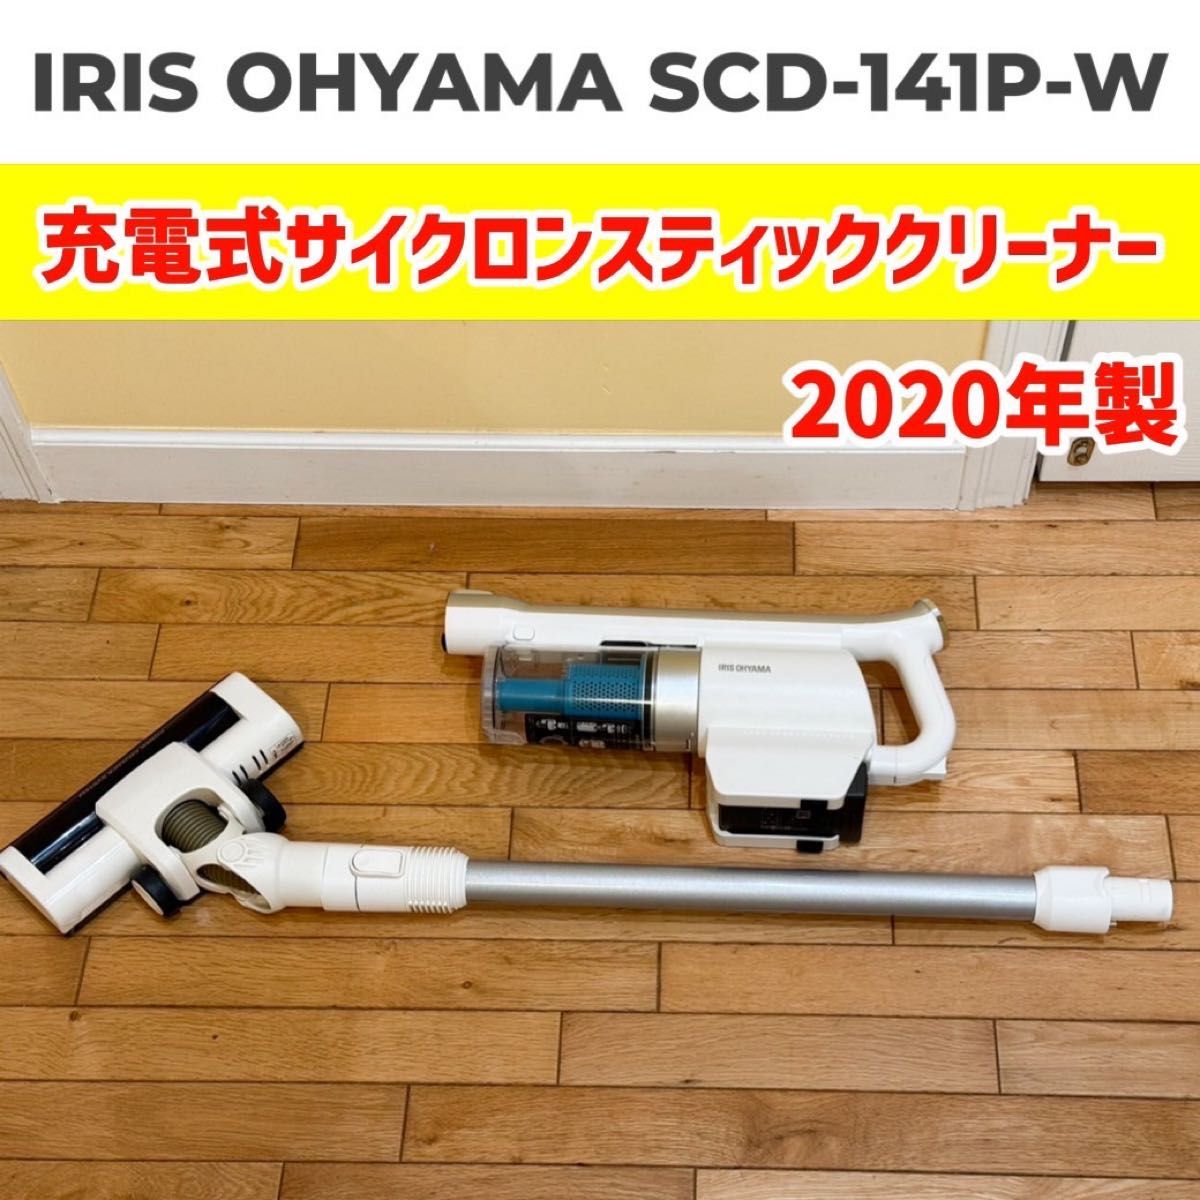 IRIS OHYAMA SCD-141P-W アイリスオーヤマ  コードレスクリーナー 掃除機 コードレス 充電式掃除機